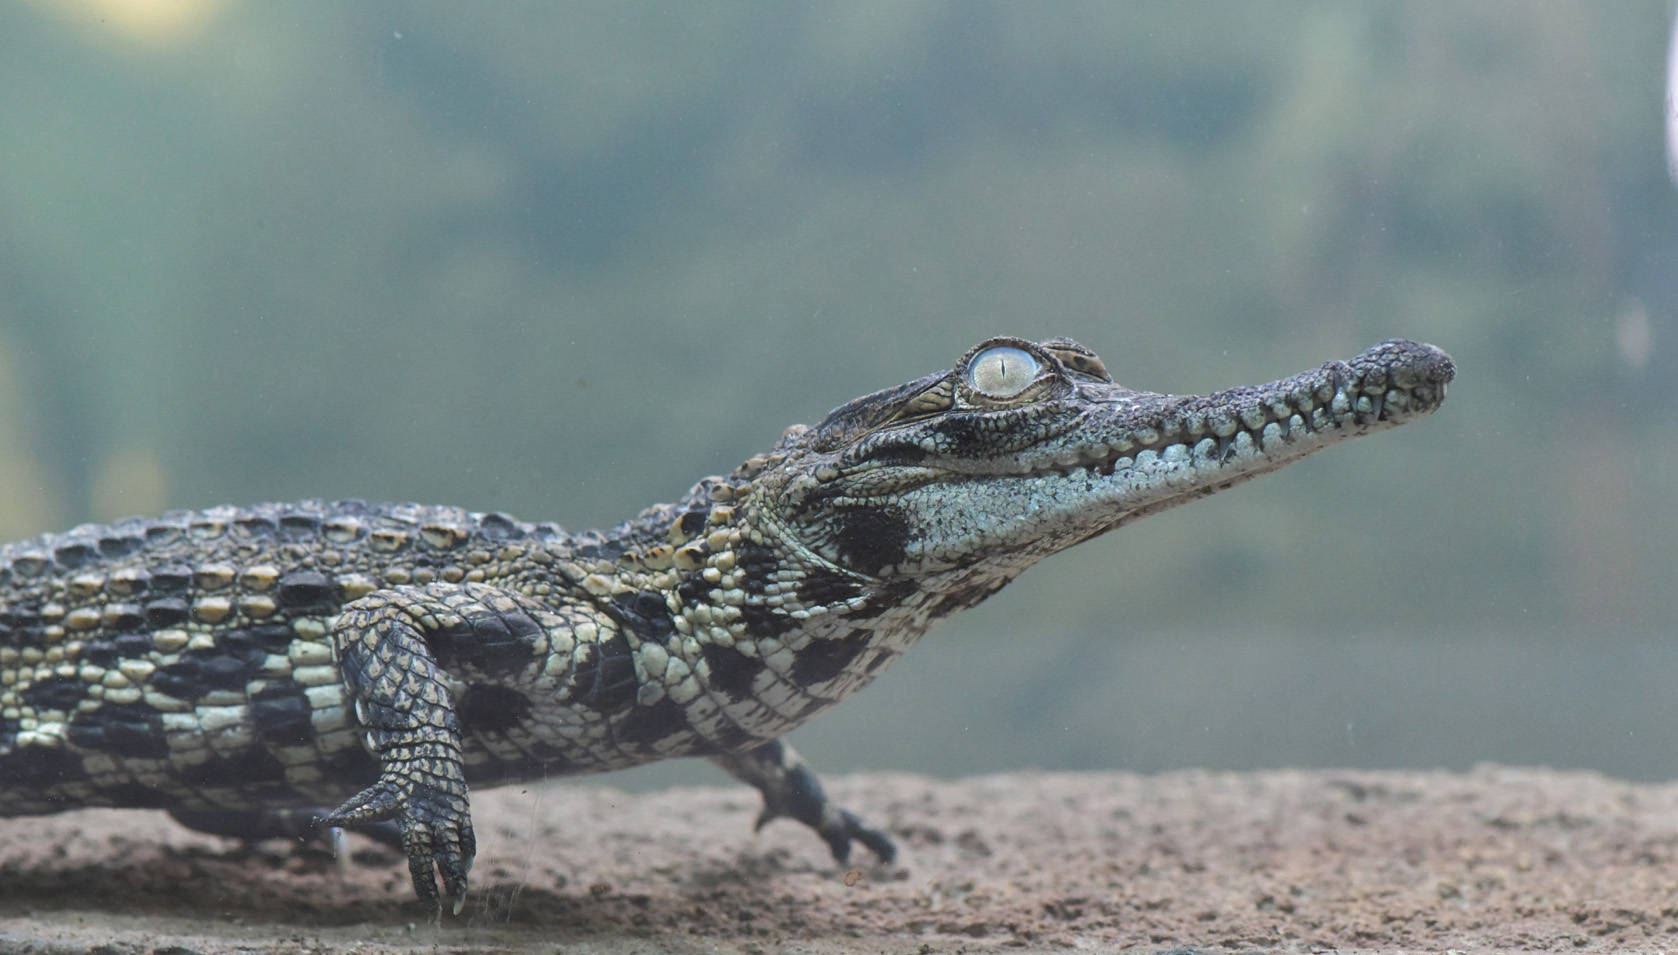 Gavial Crocodile Baby Nature Photography Wallpaper